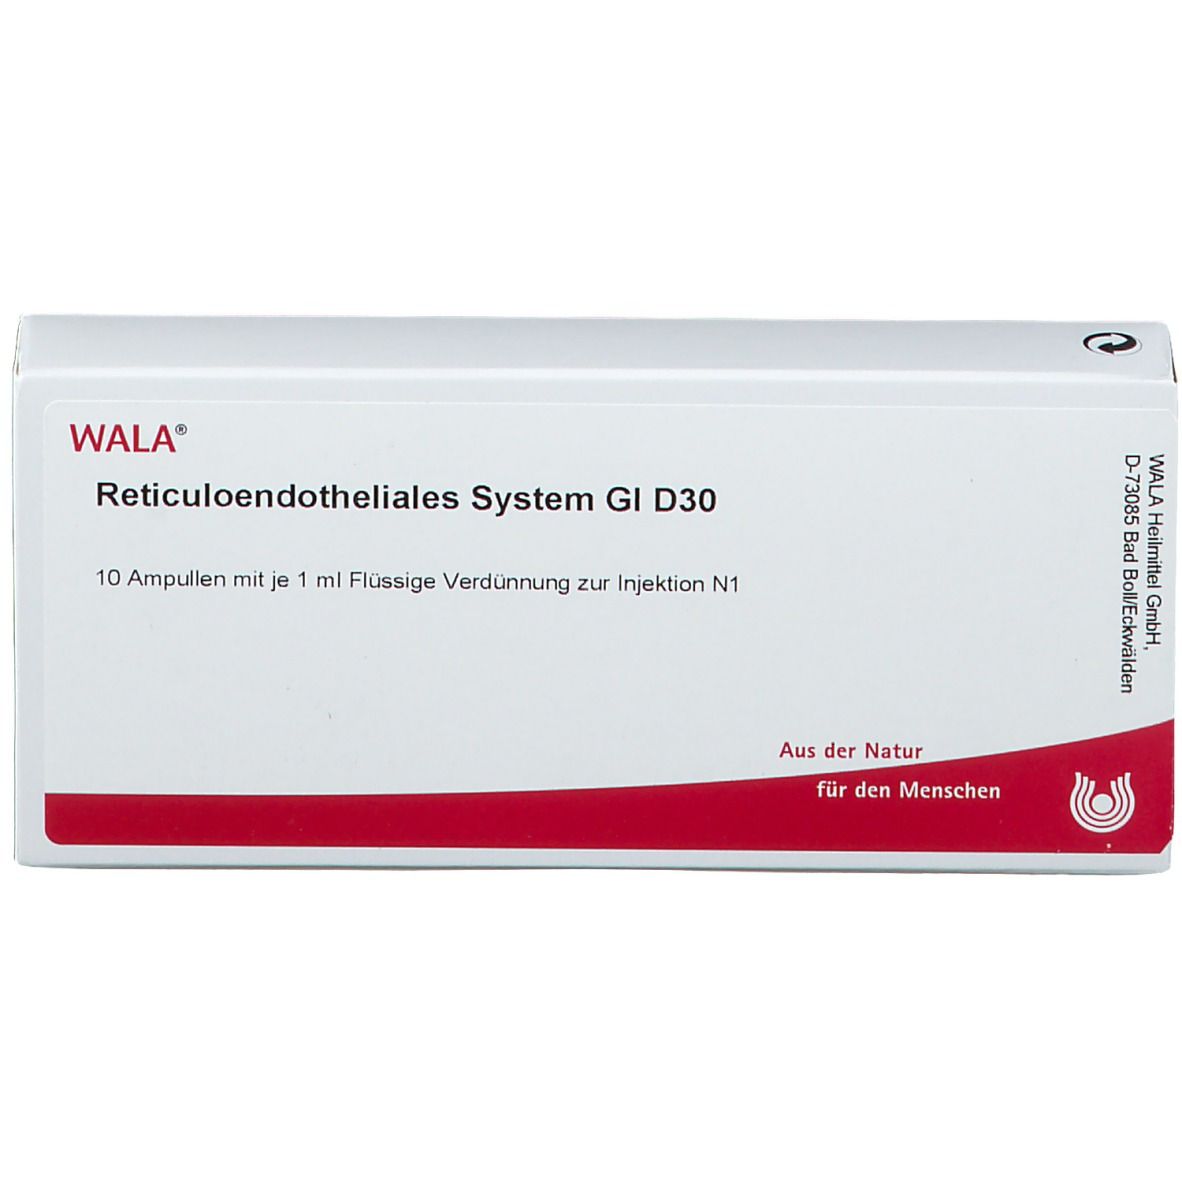 WALA® Reticuloendotheliales System Gl D30